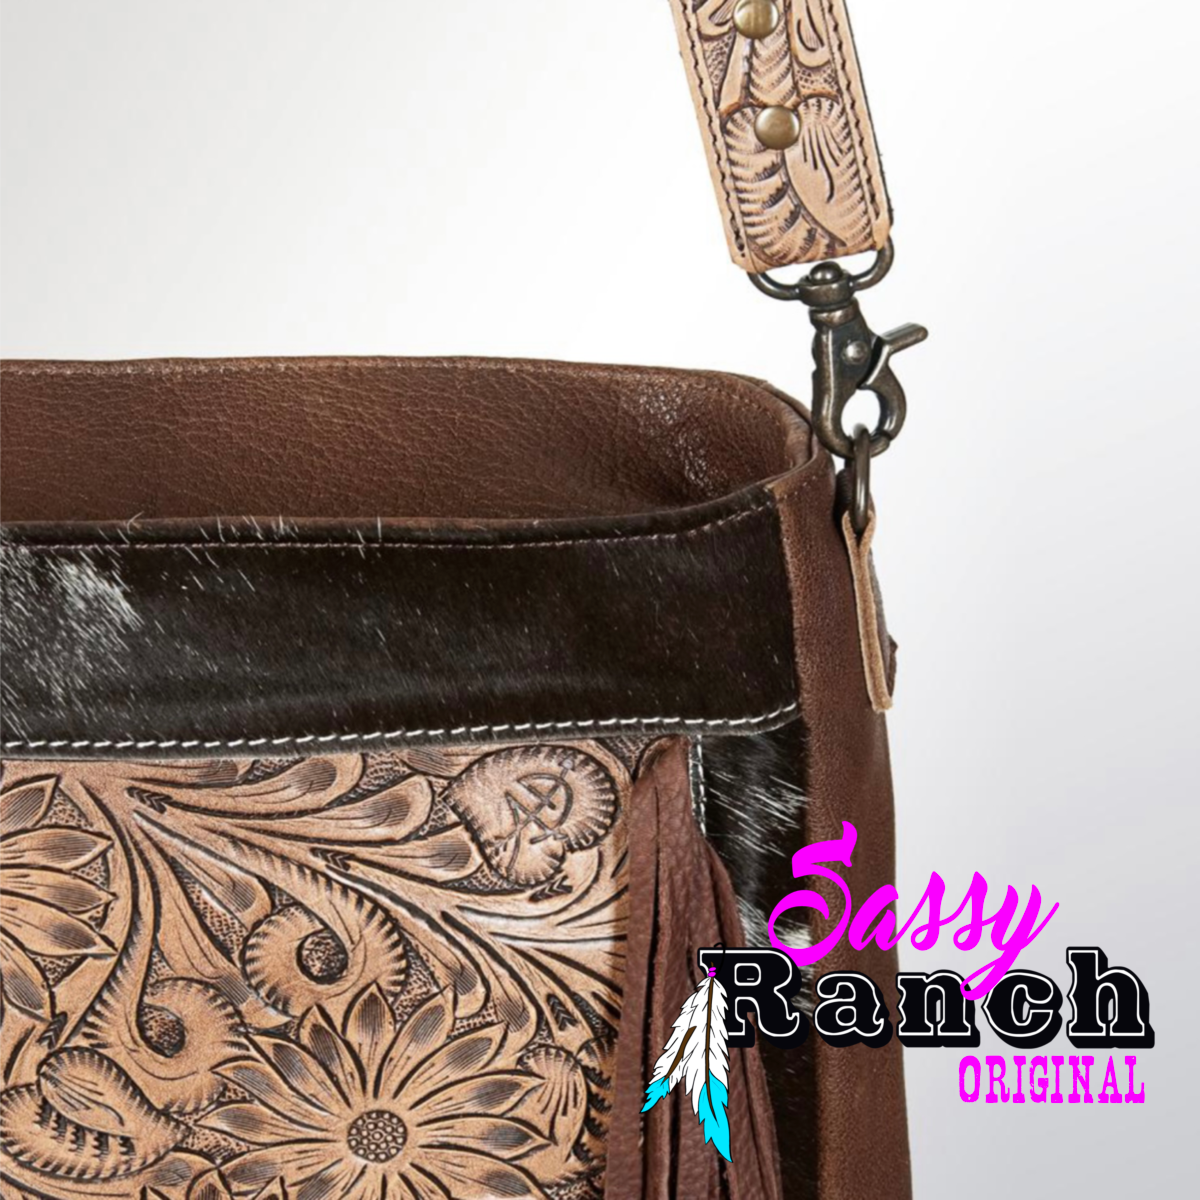 The Sharon Leather Fringe Crossbody Handbag